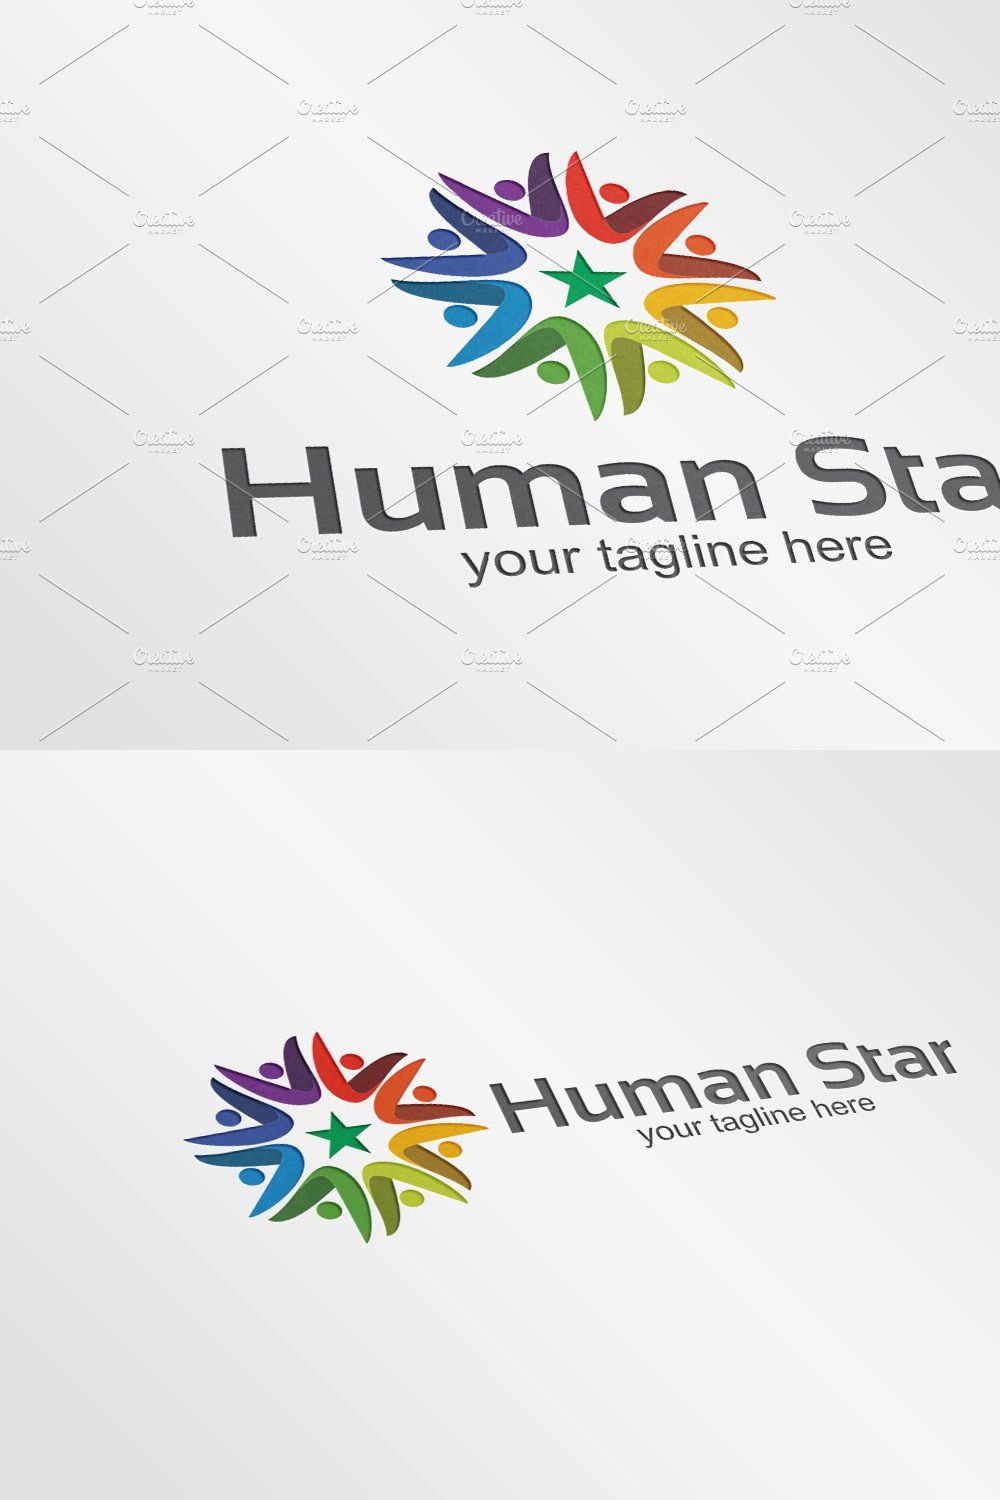 Human Star - Logo pinterest preview image.